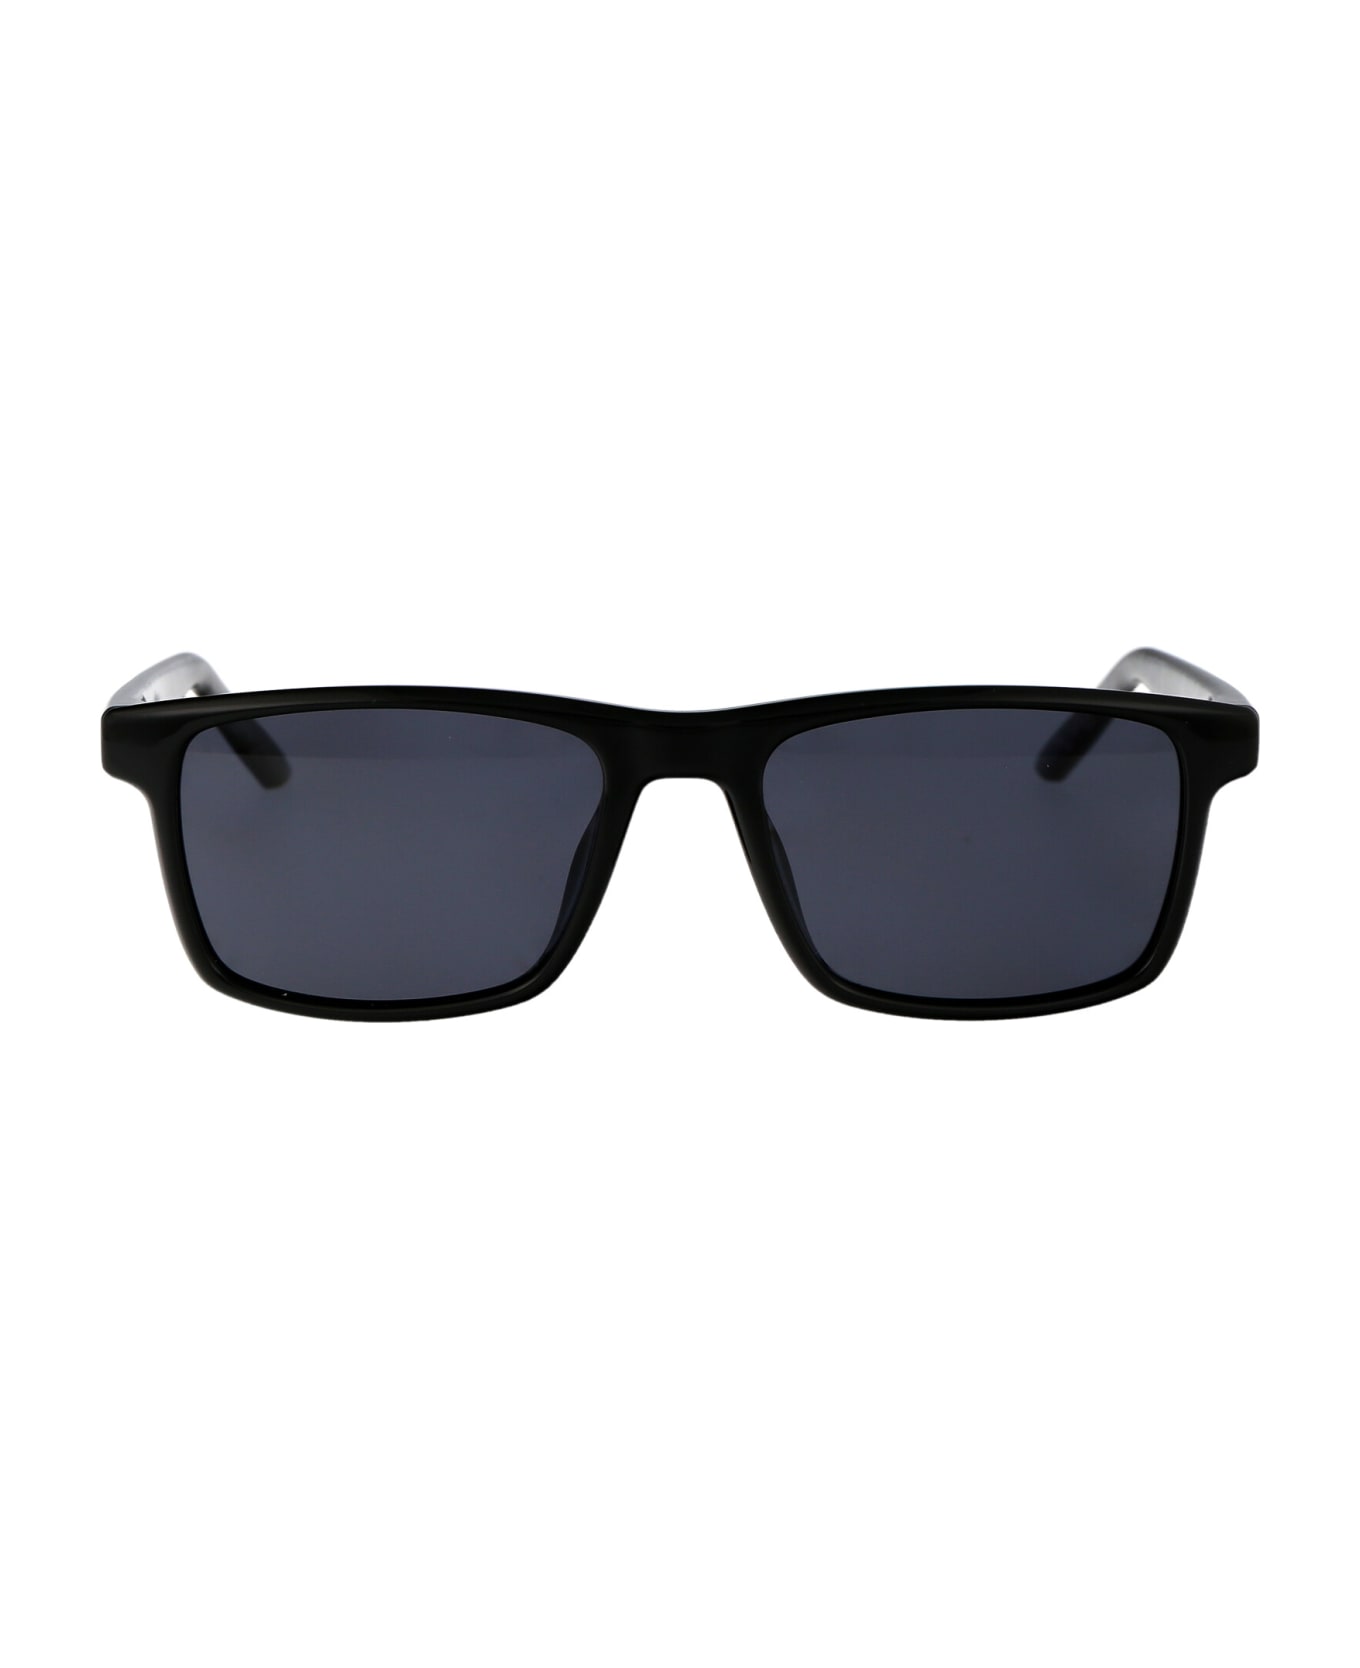 Nike Cheer Sunglasses - 011 BLACK